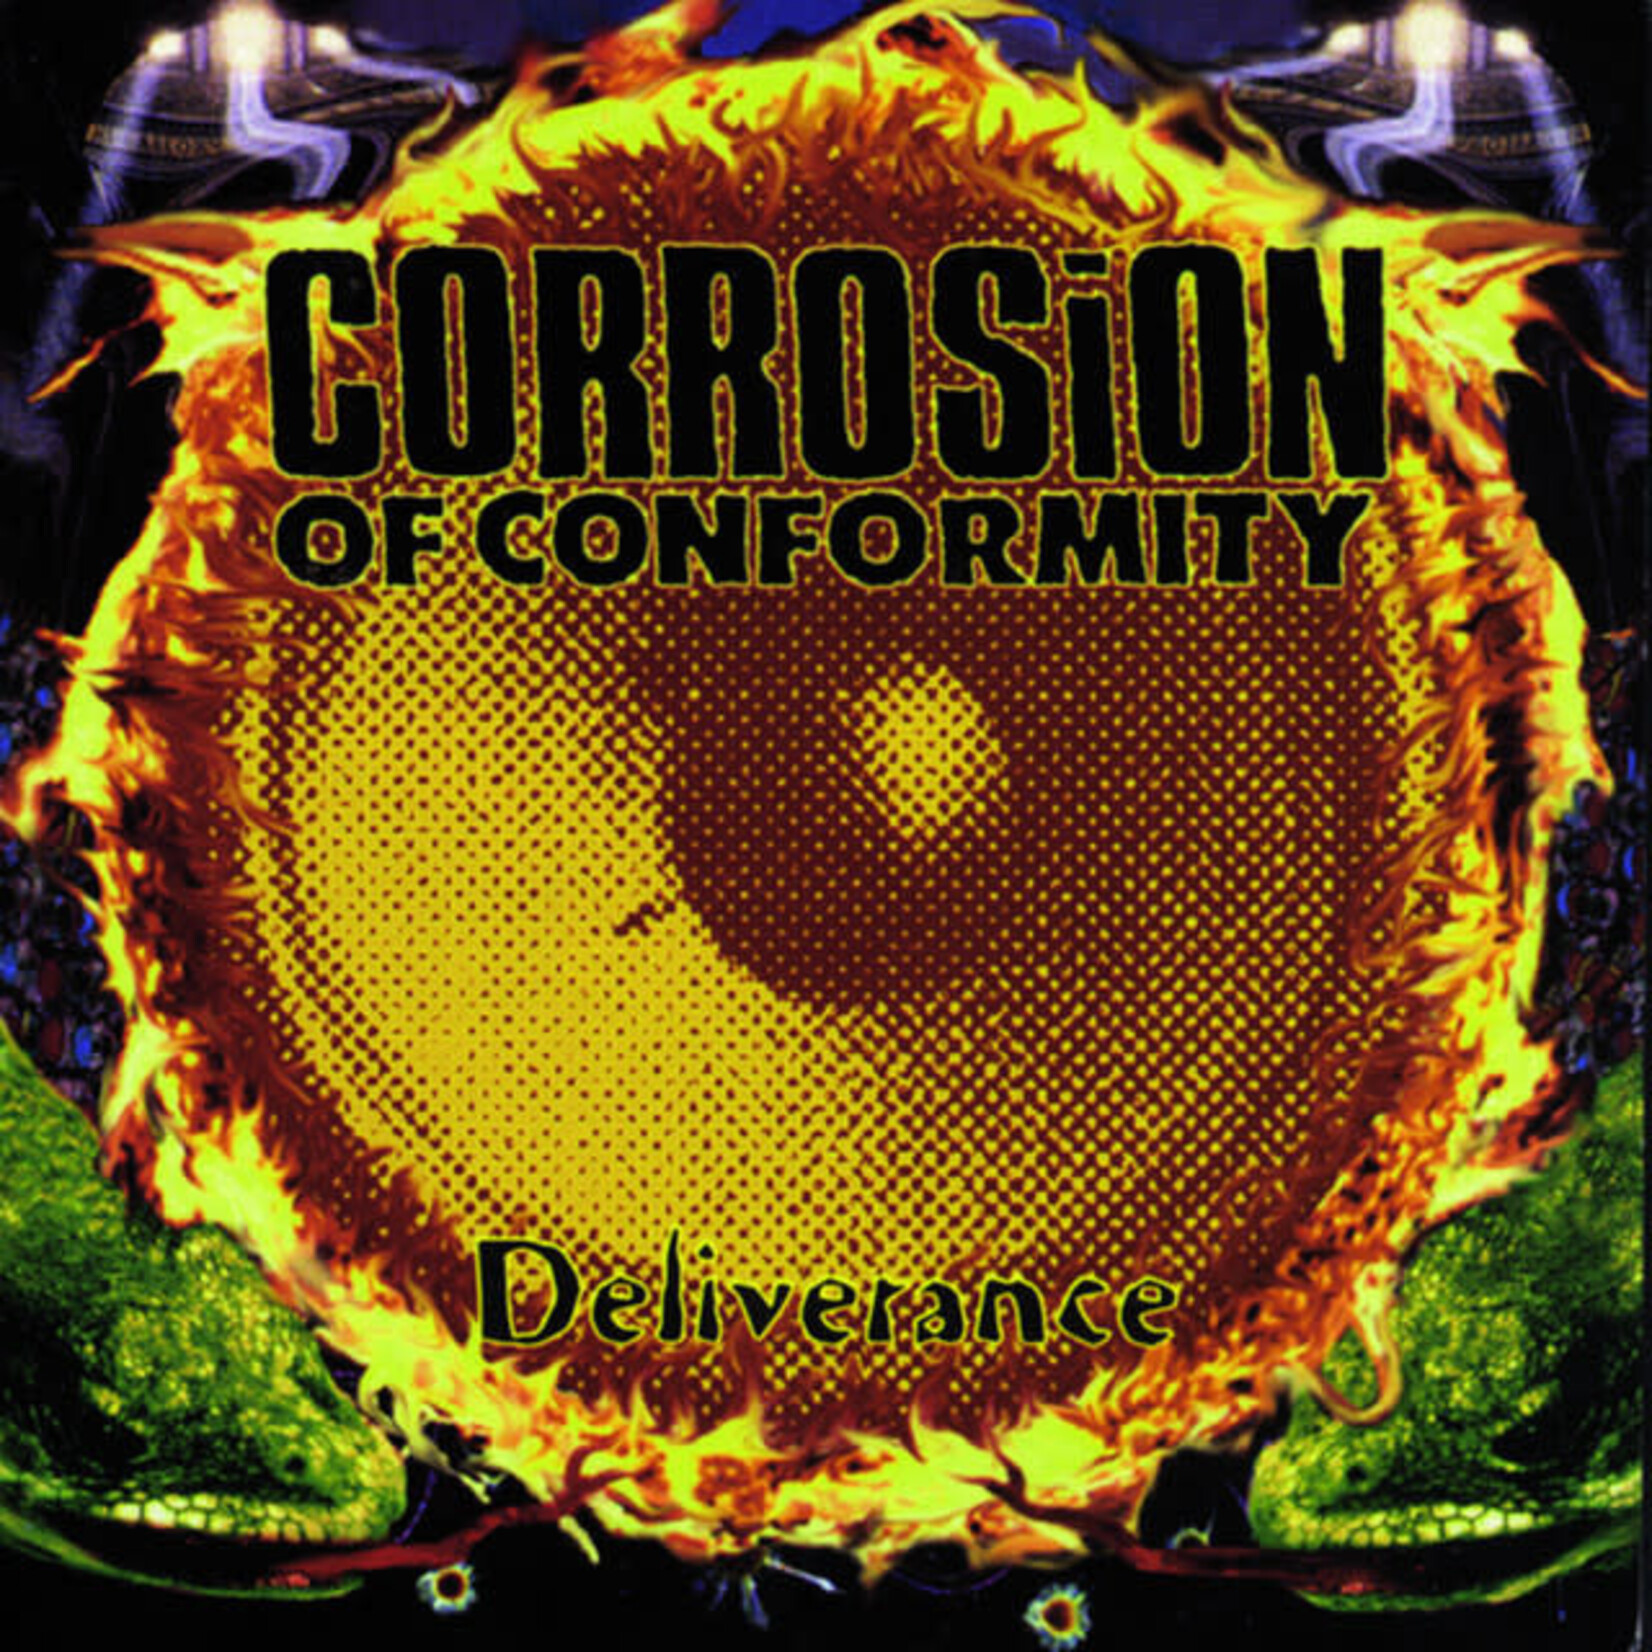 Corrosion Of Conformity - Deliverance [CD]